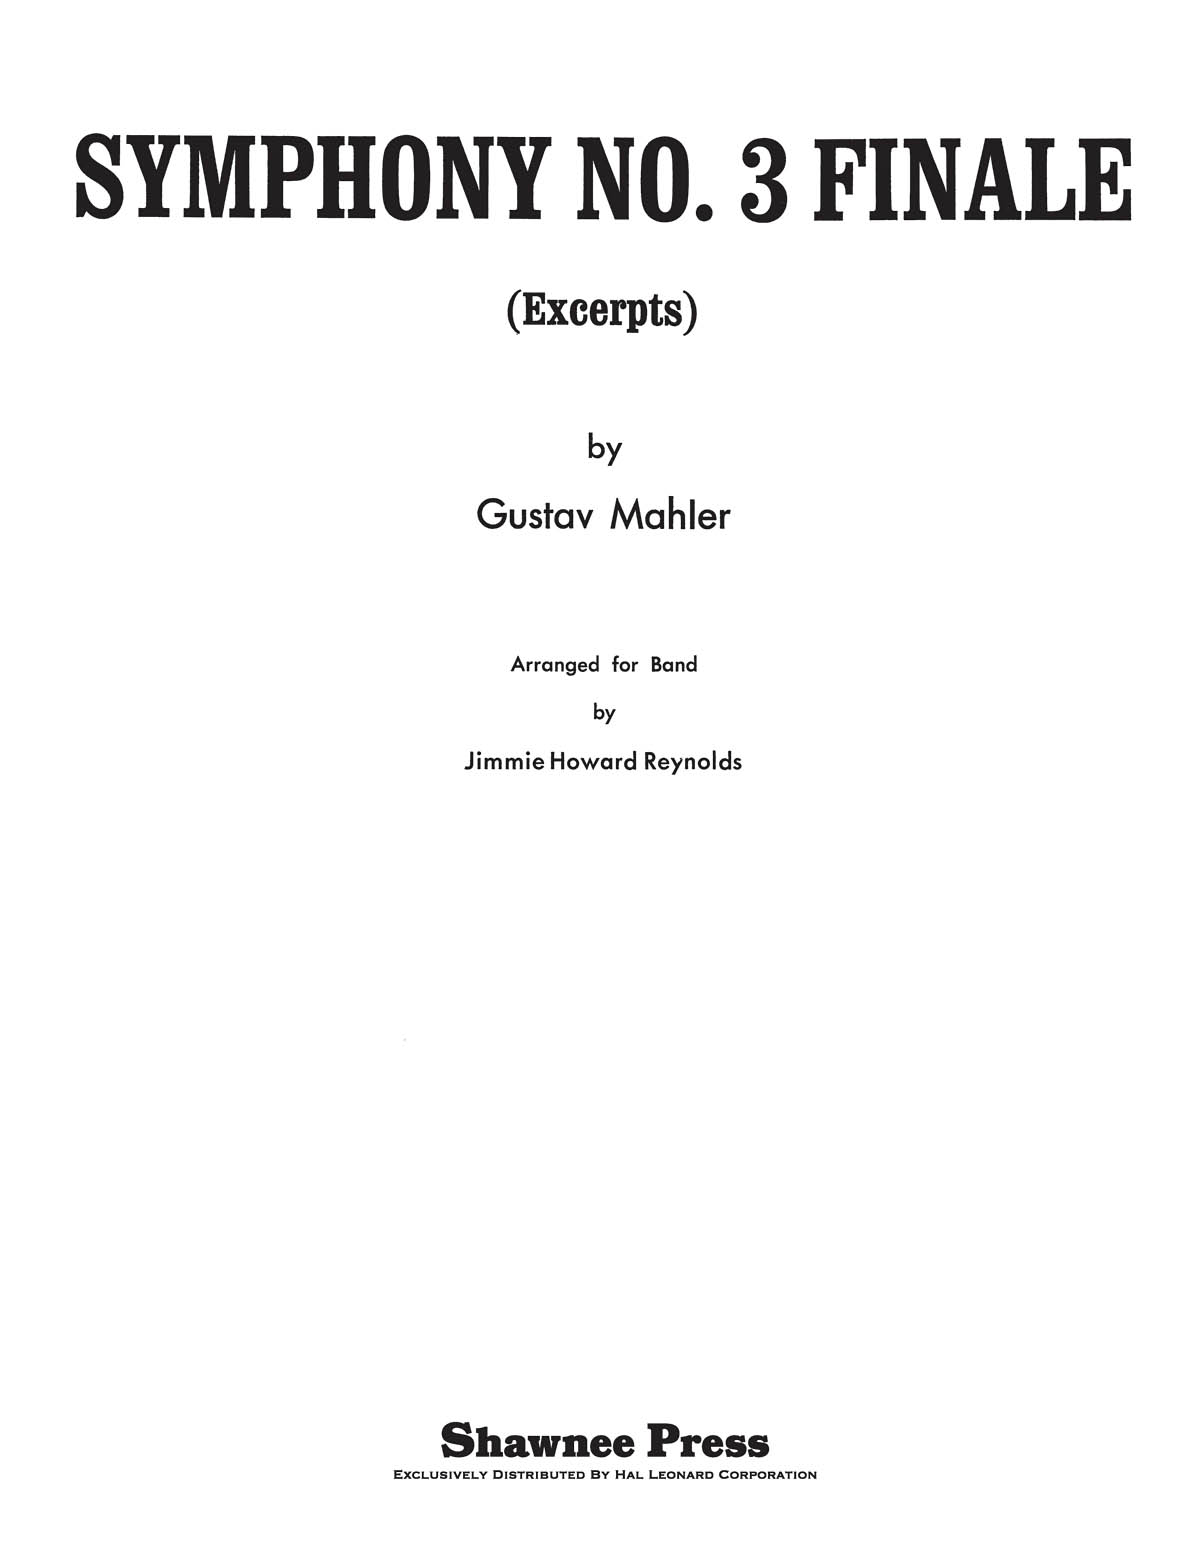 Gustav Mahler: Symphony No. 3 - Finale: Concert Band: Score & Parts